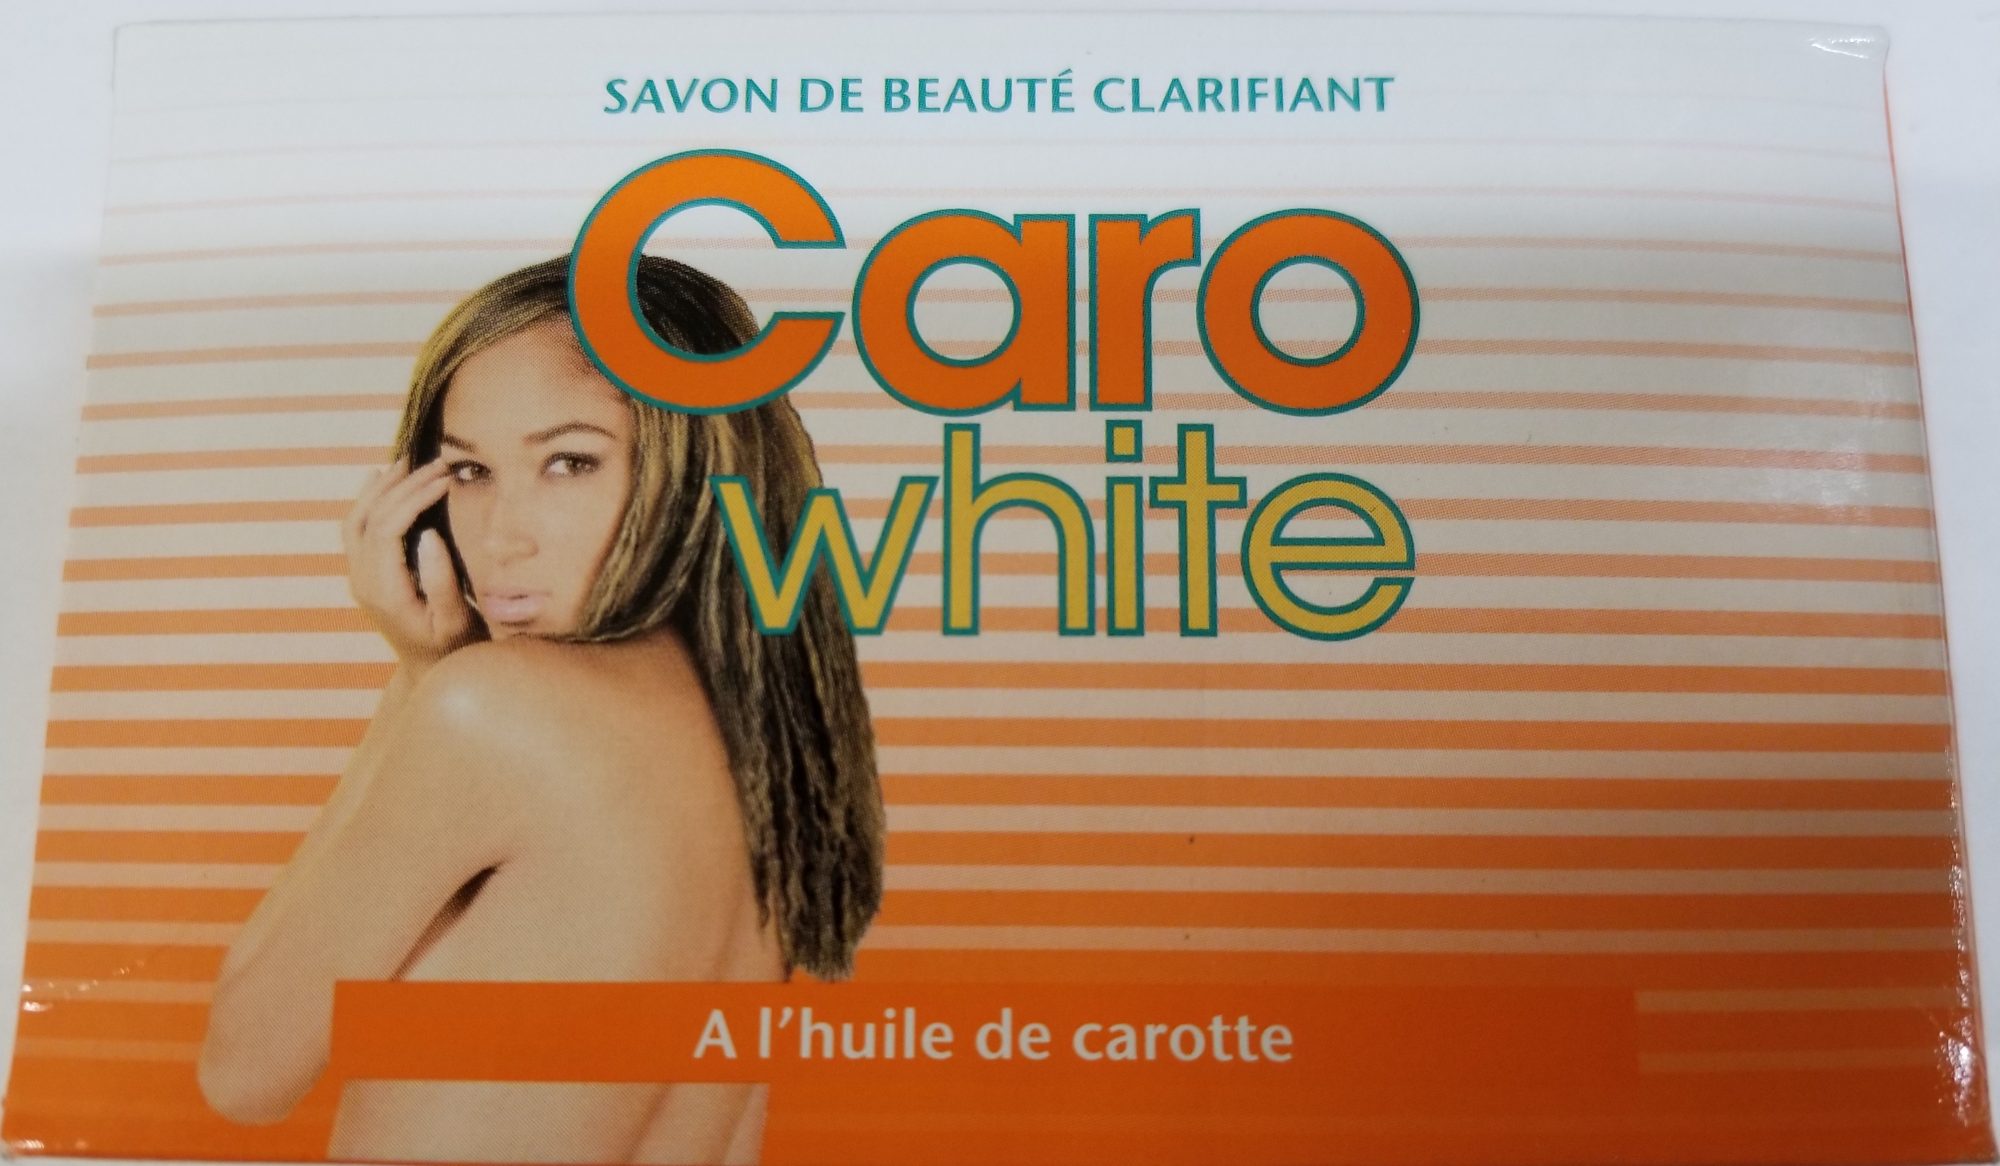 CARO WHITE Lightening Beauty Soap 180g - Royac Shop